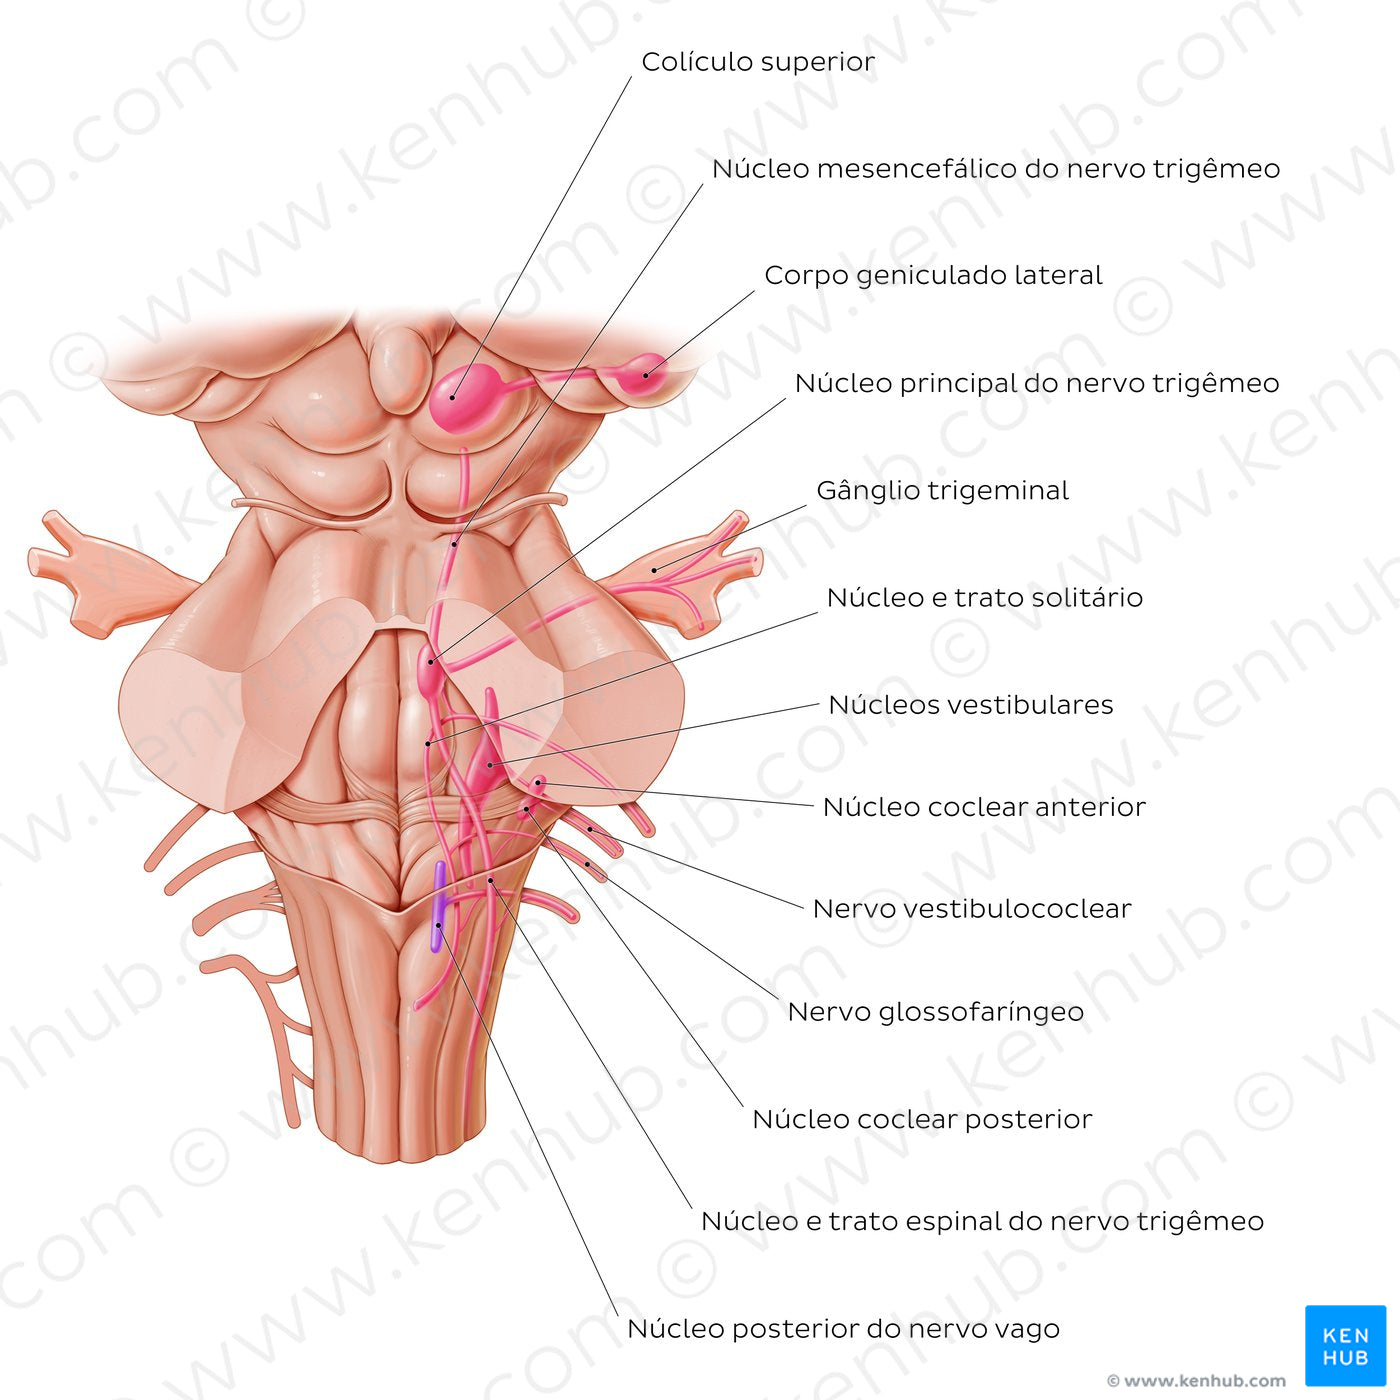 Cranial nerve nuclei - posterior view (afferent) (Portuguese)